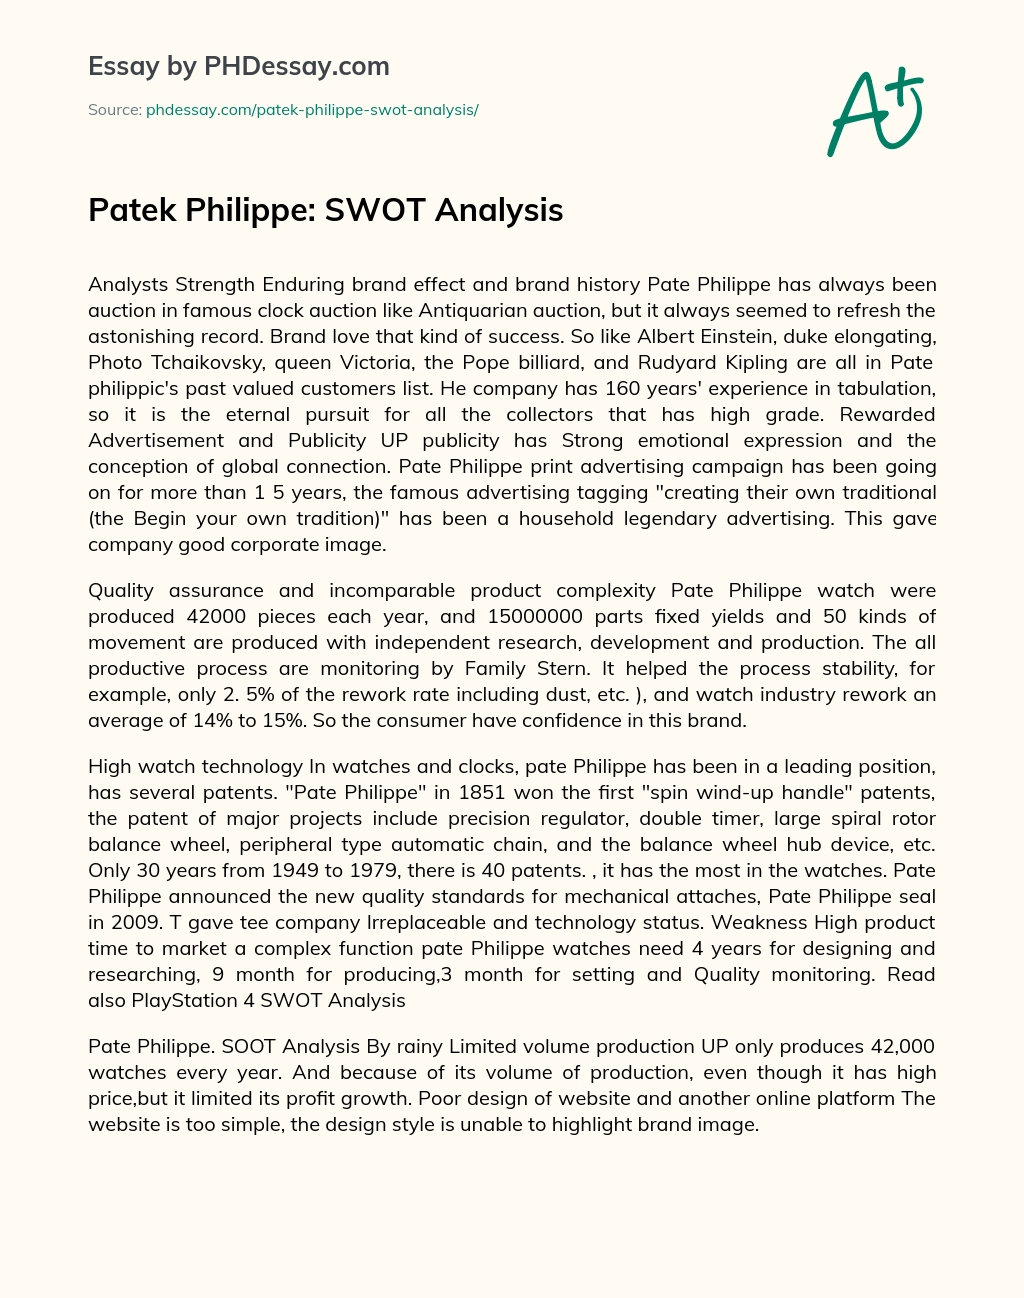 Patek Philippe: SWOT Analysis essay